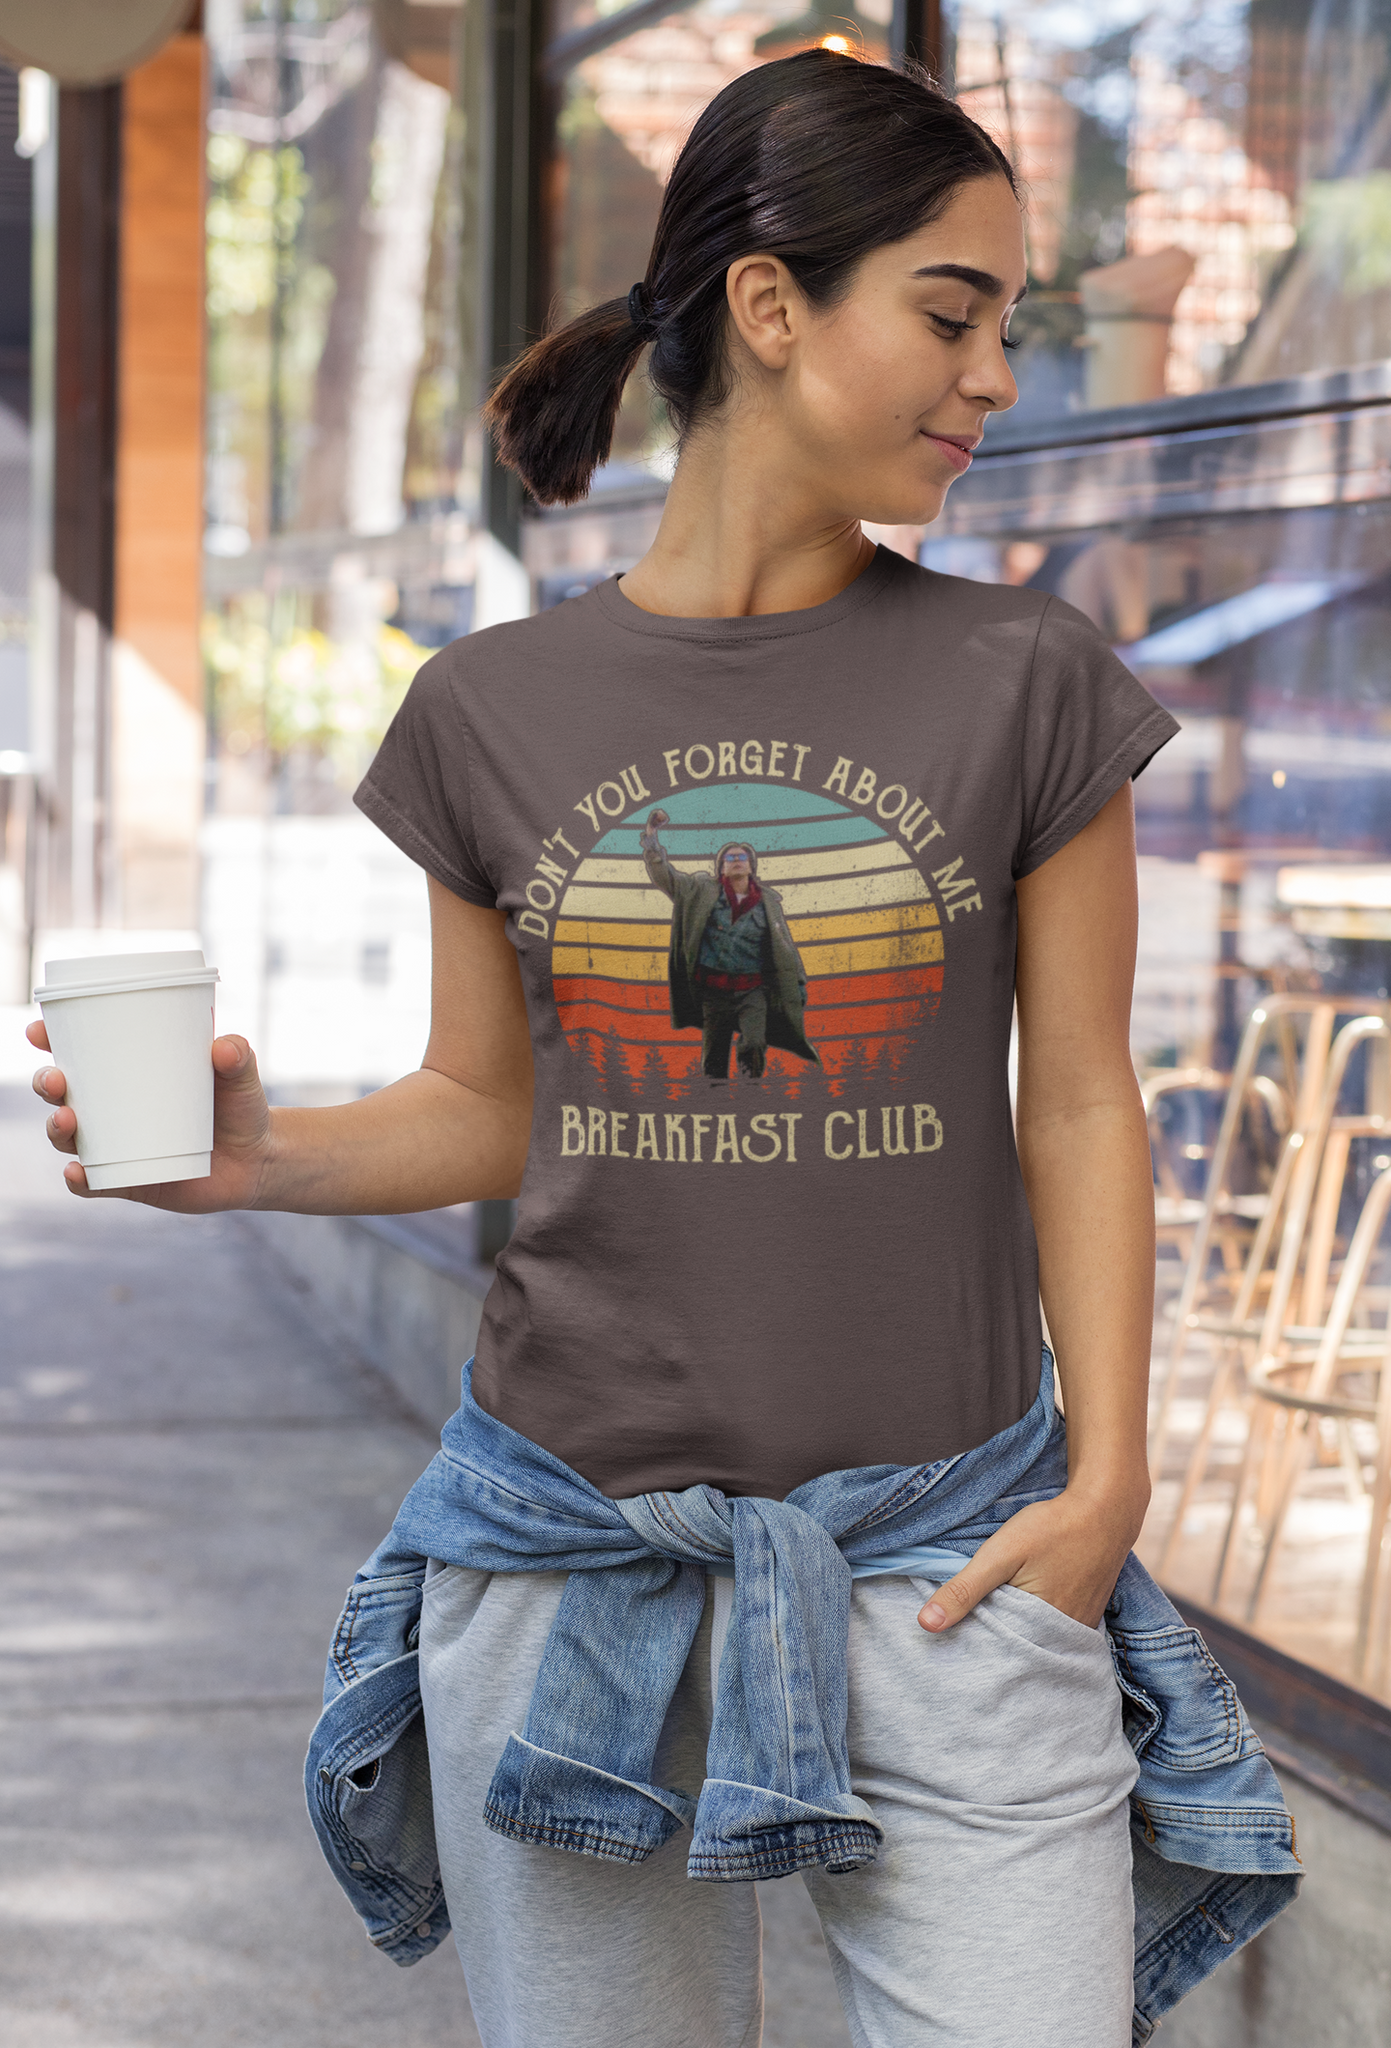 Breakfast Club Vintage T Shirt, John Bender T Shirt, Dont You Forget About Me Breakfast Club Tshirt